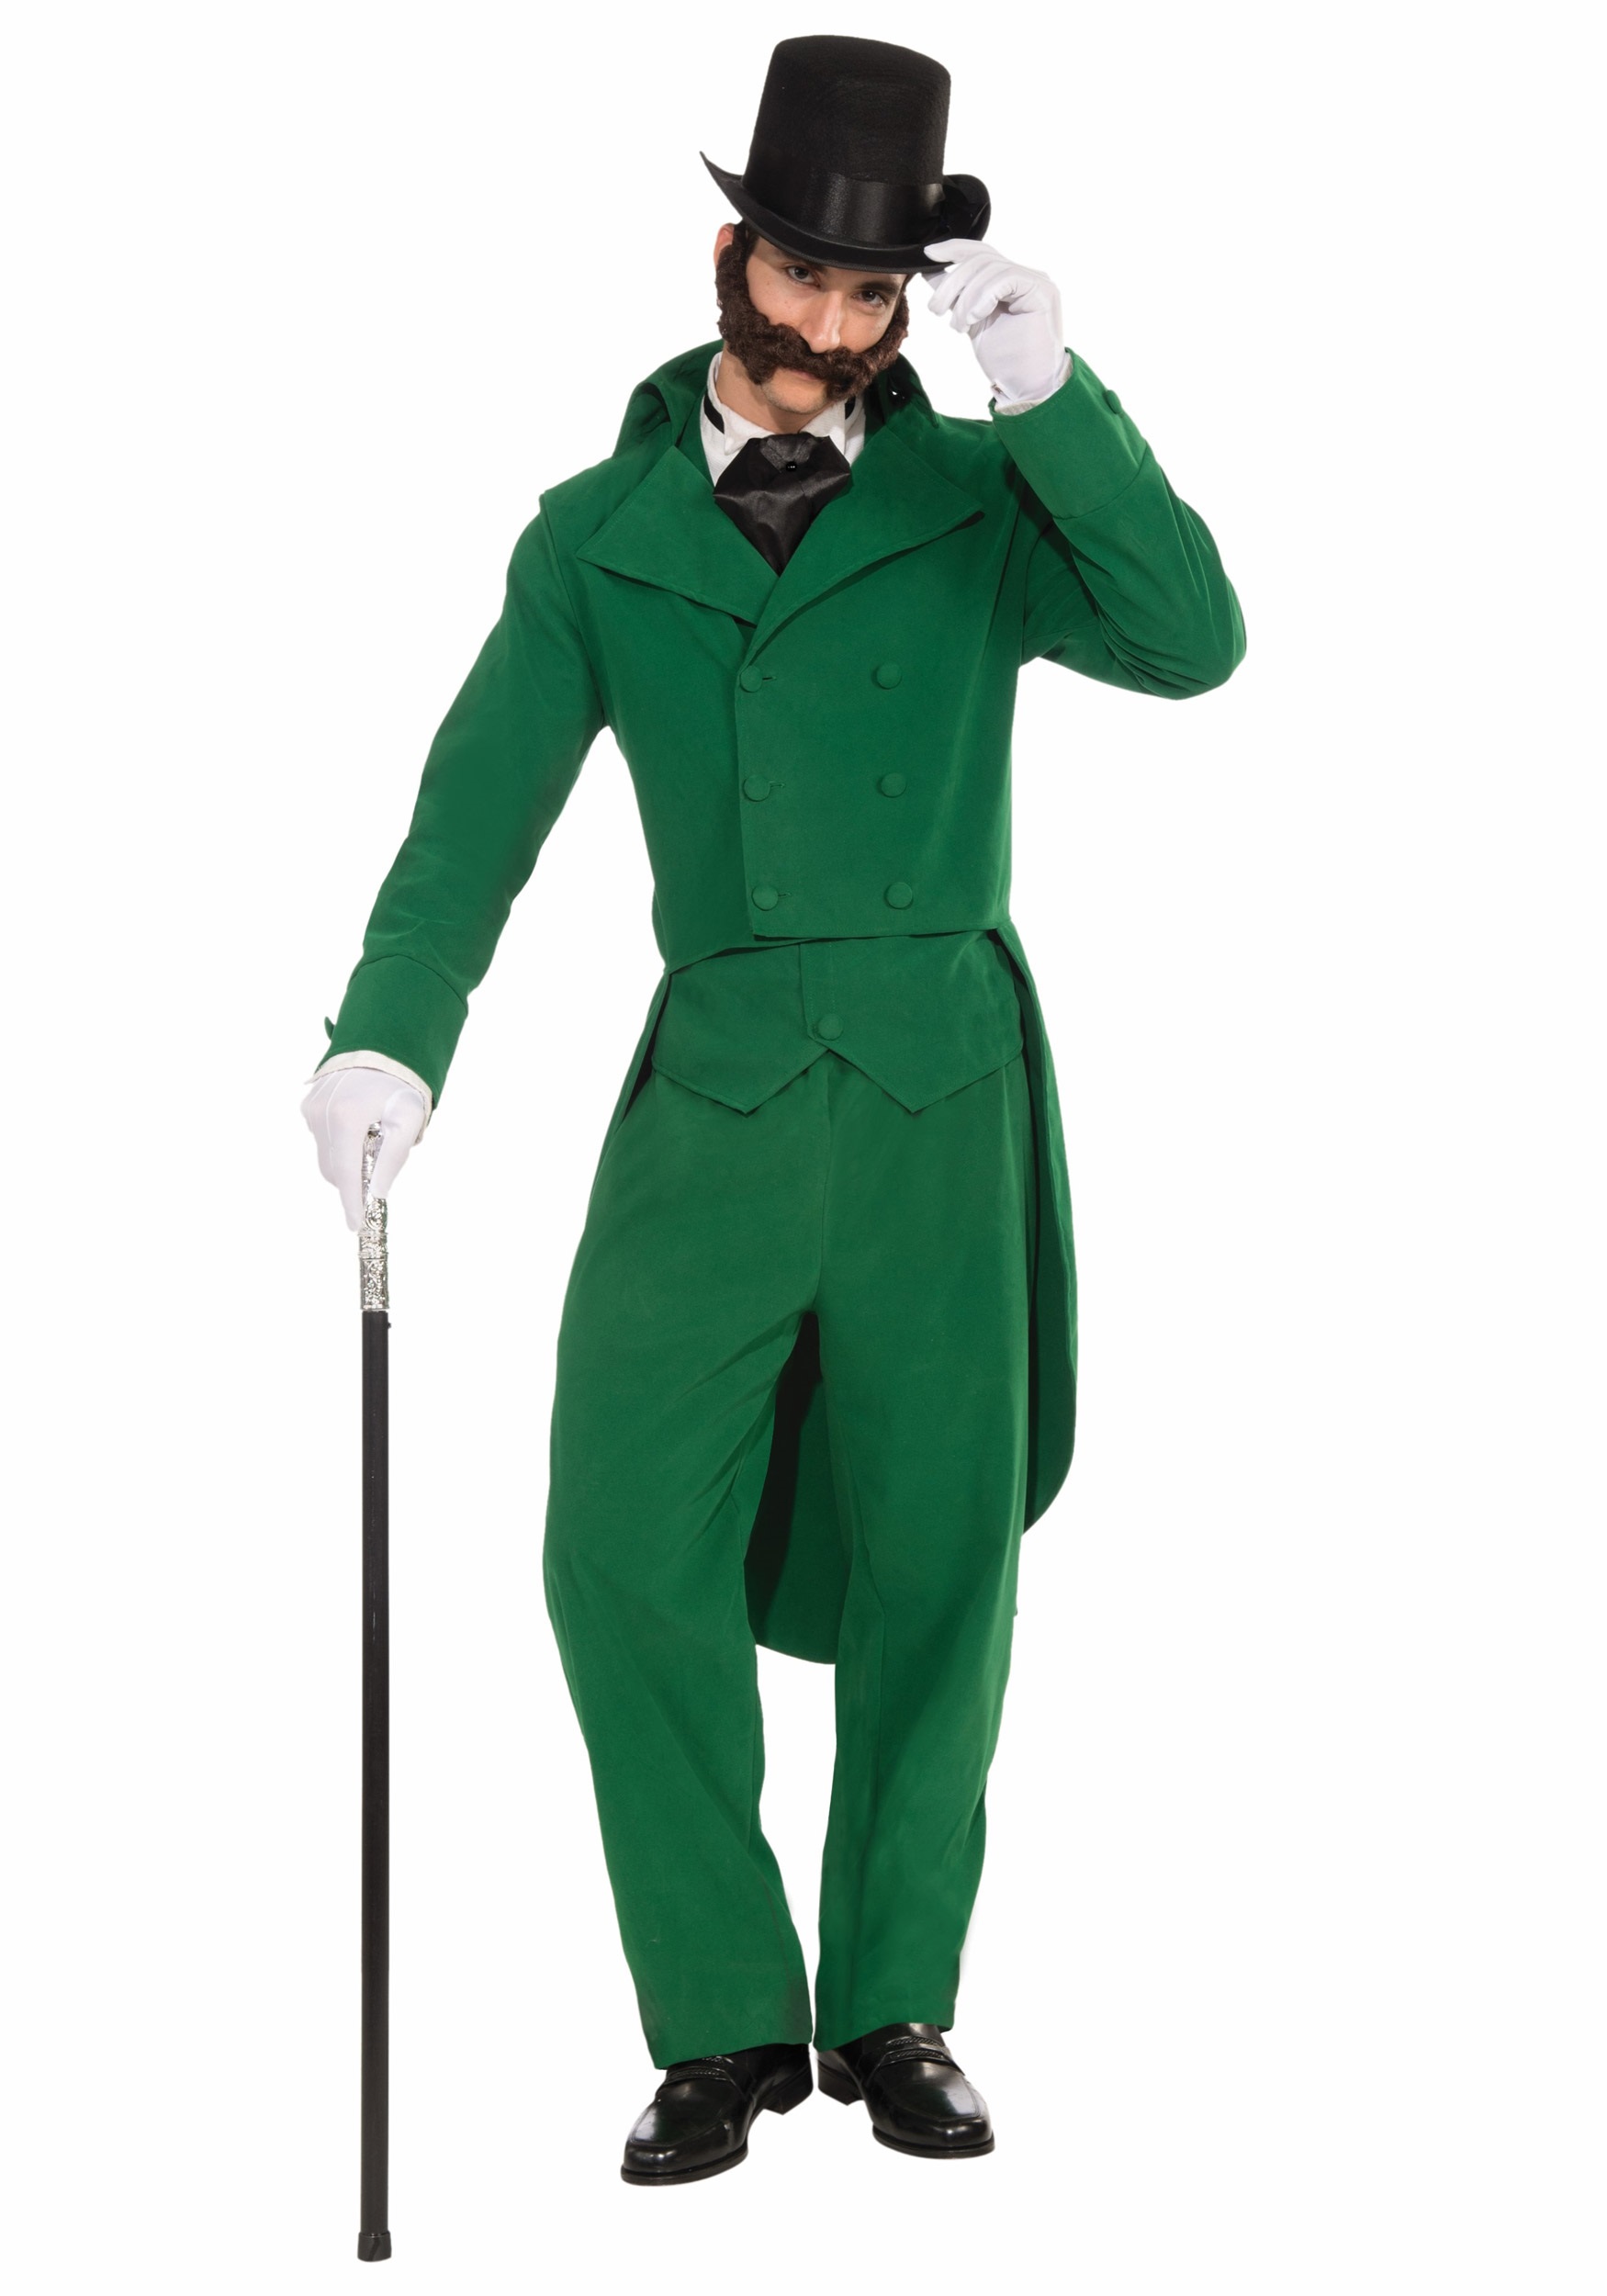 Caroling Gentleman Costume for Men